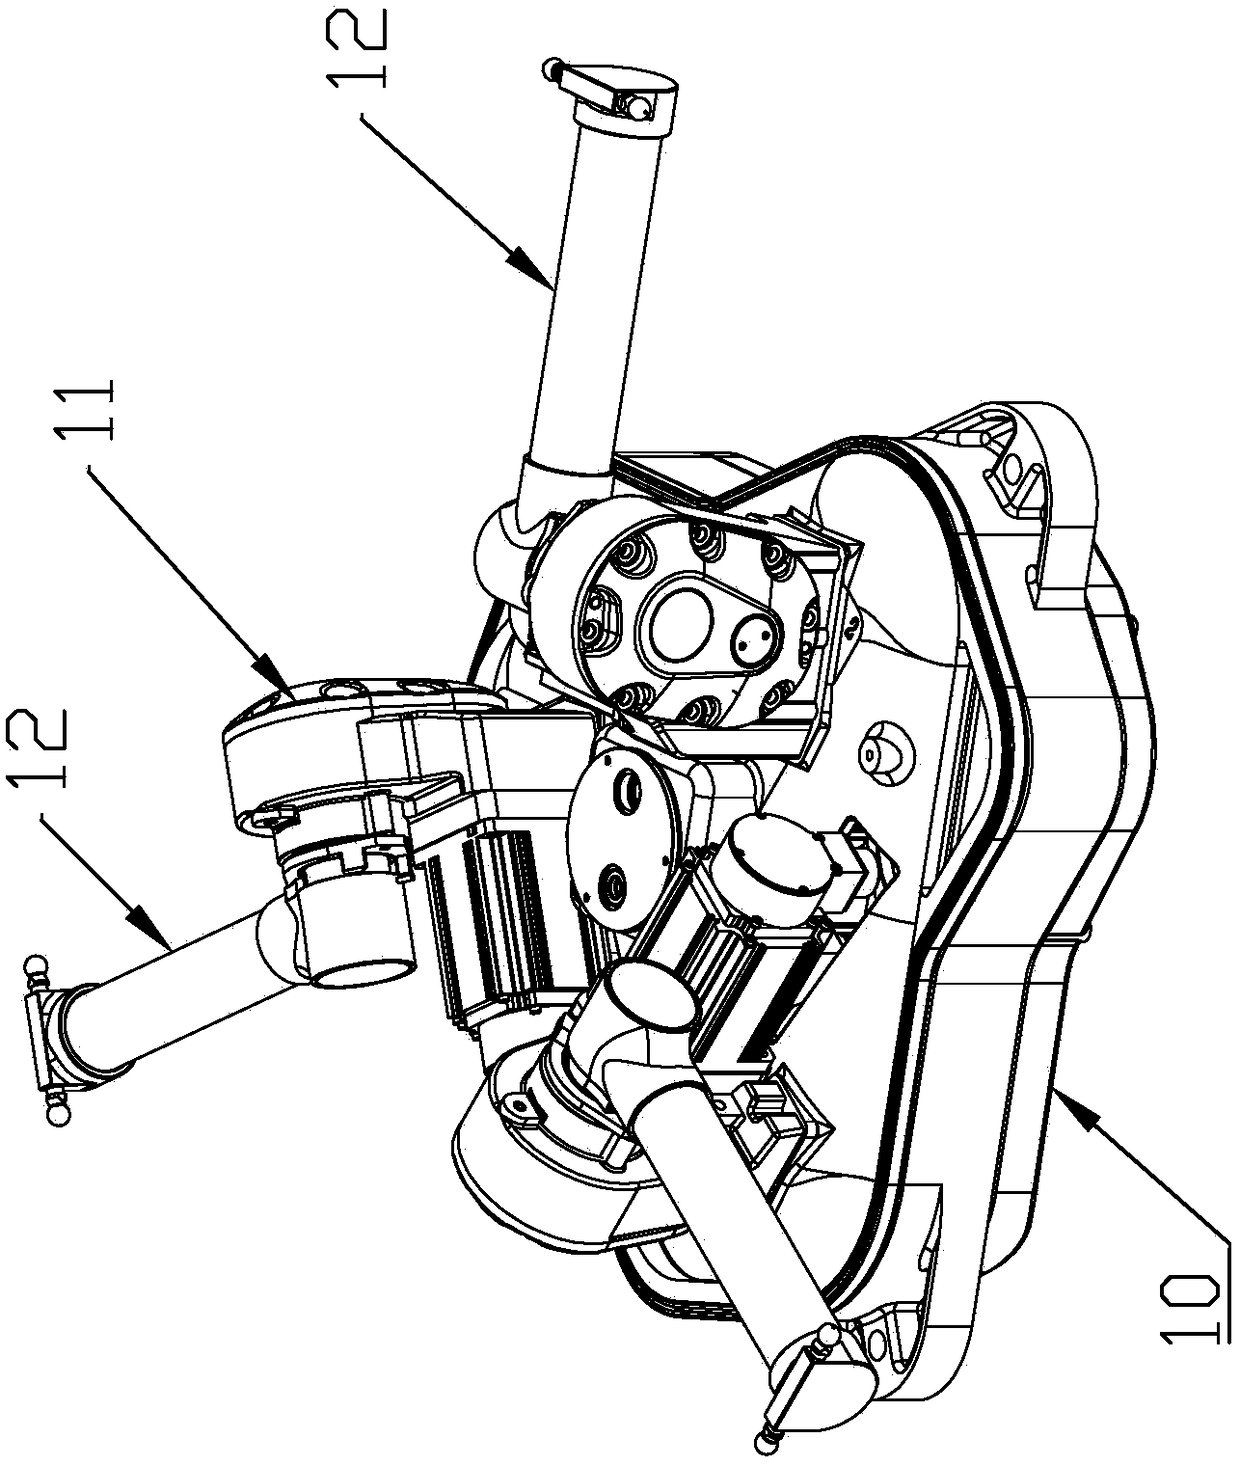 Mechanical hand based on delta parallel mechanism